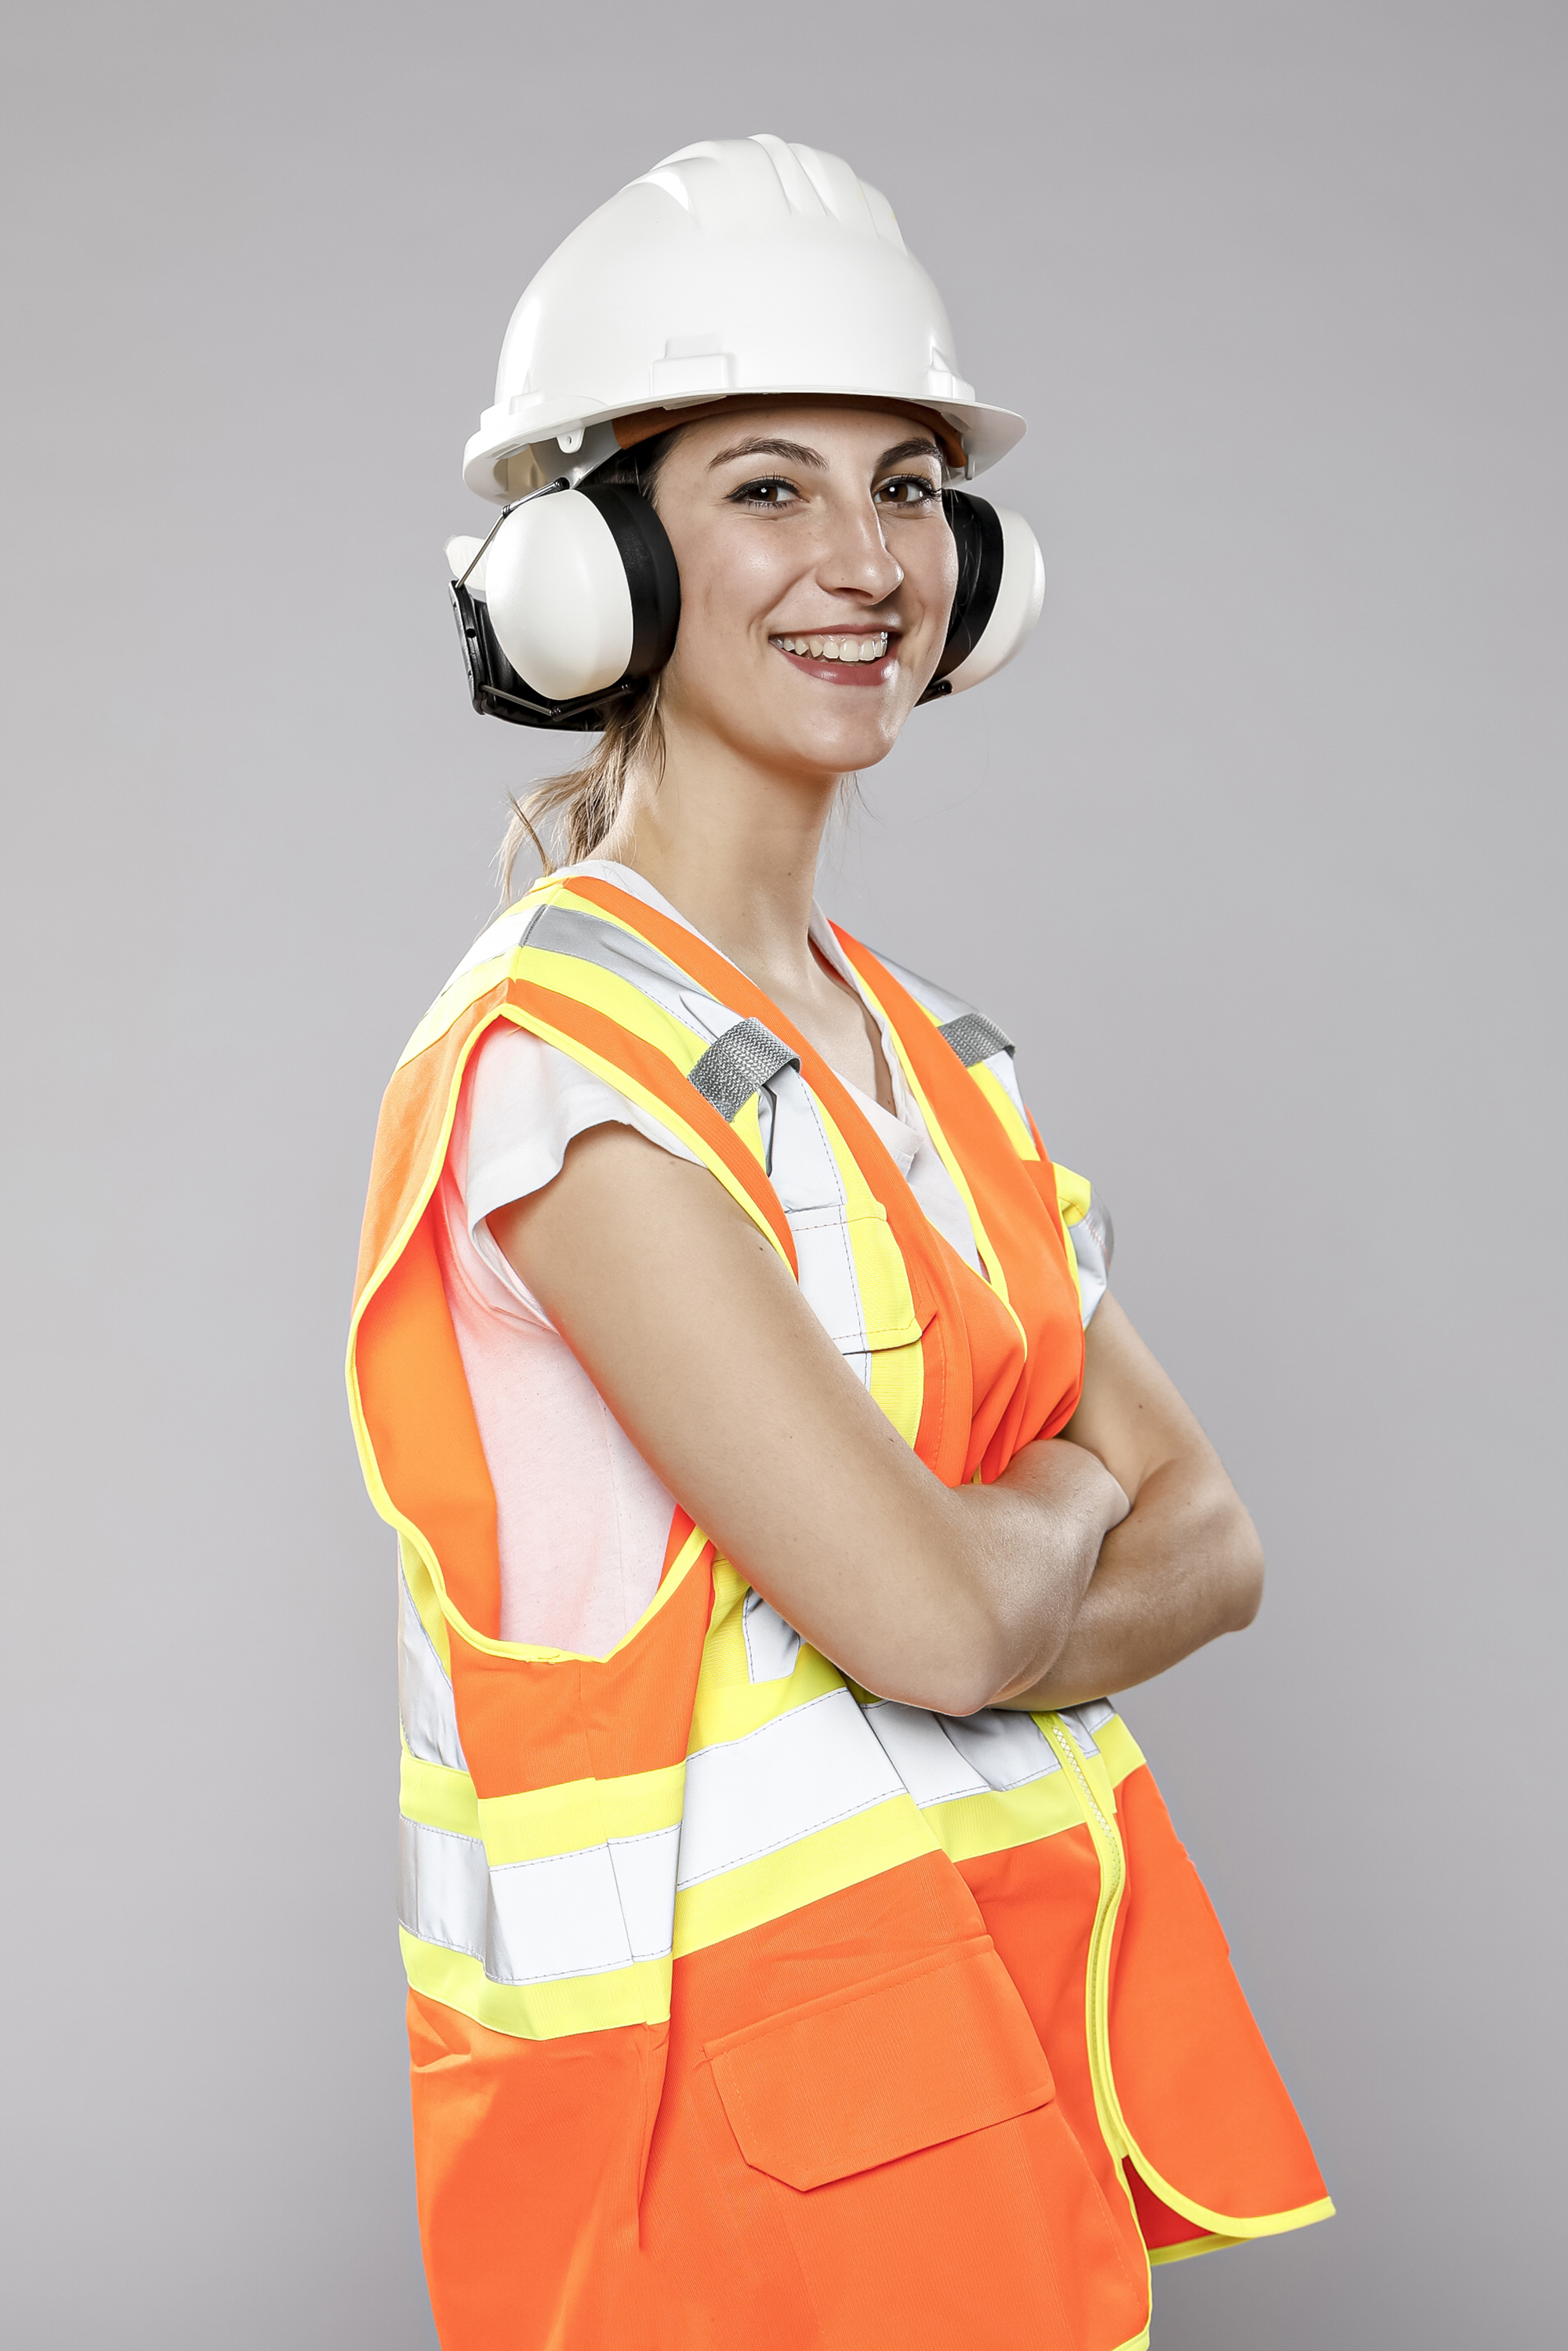 side-view-smiley-female-engineer-with-helmet